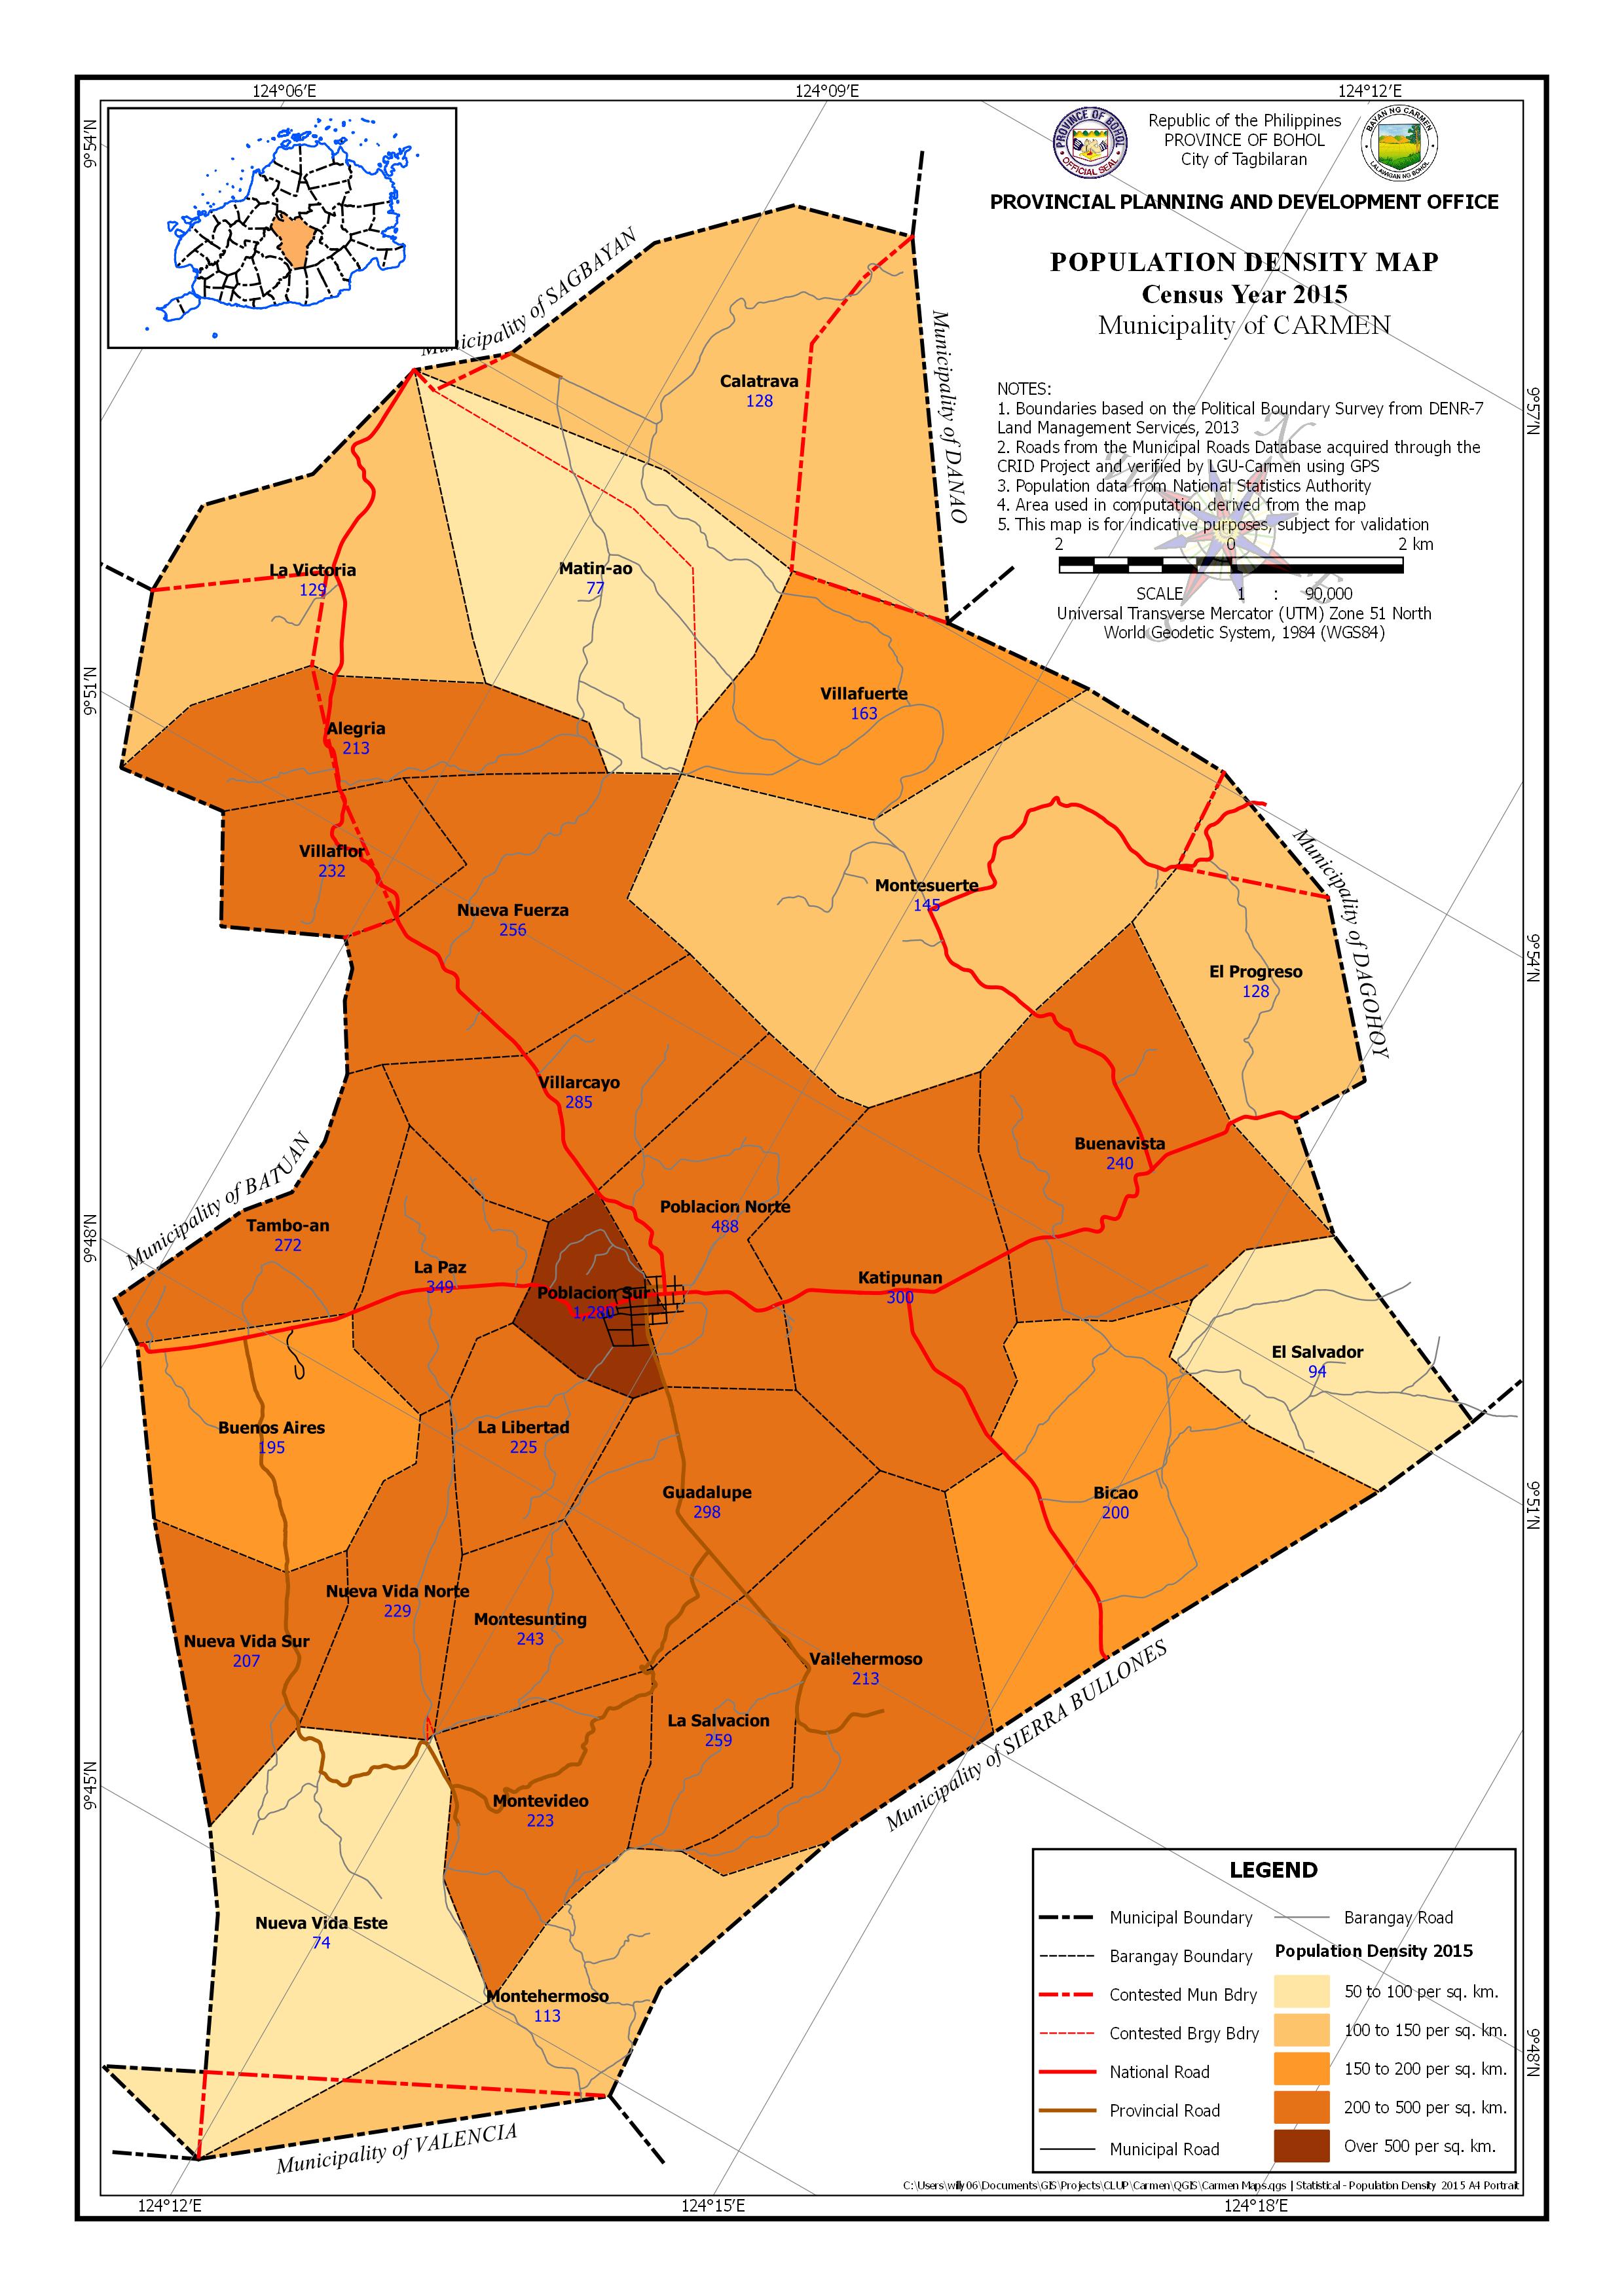 Population Density Census Year: 2015